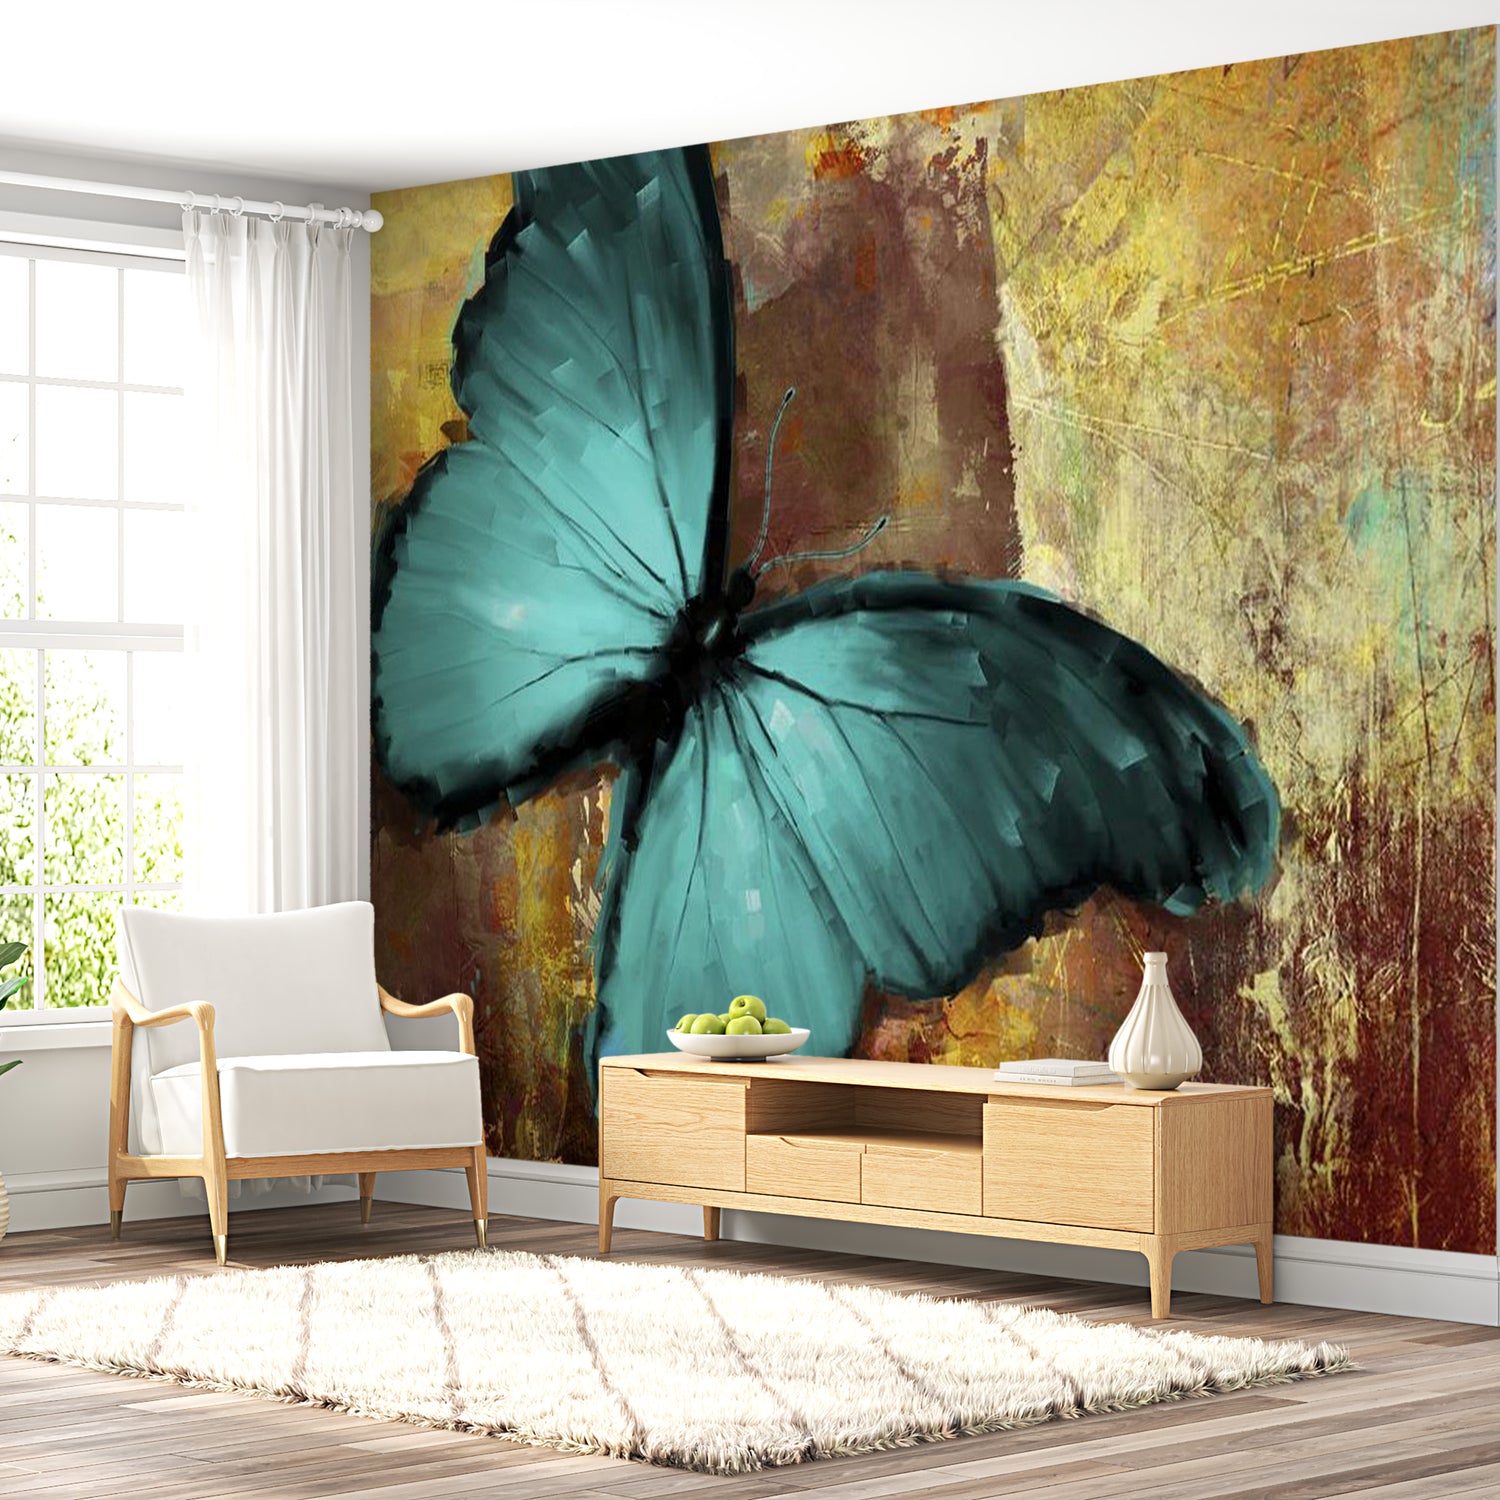 Animal Wallpaper Wall Mural - Artistic Butterfly